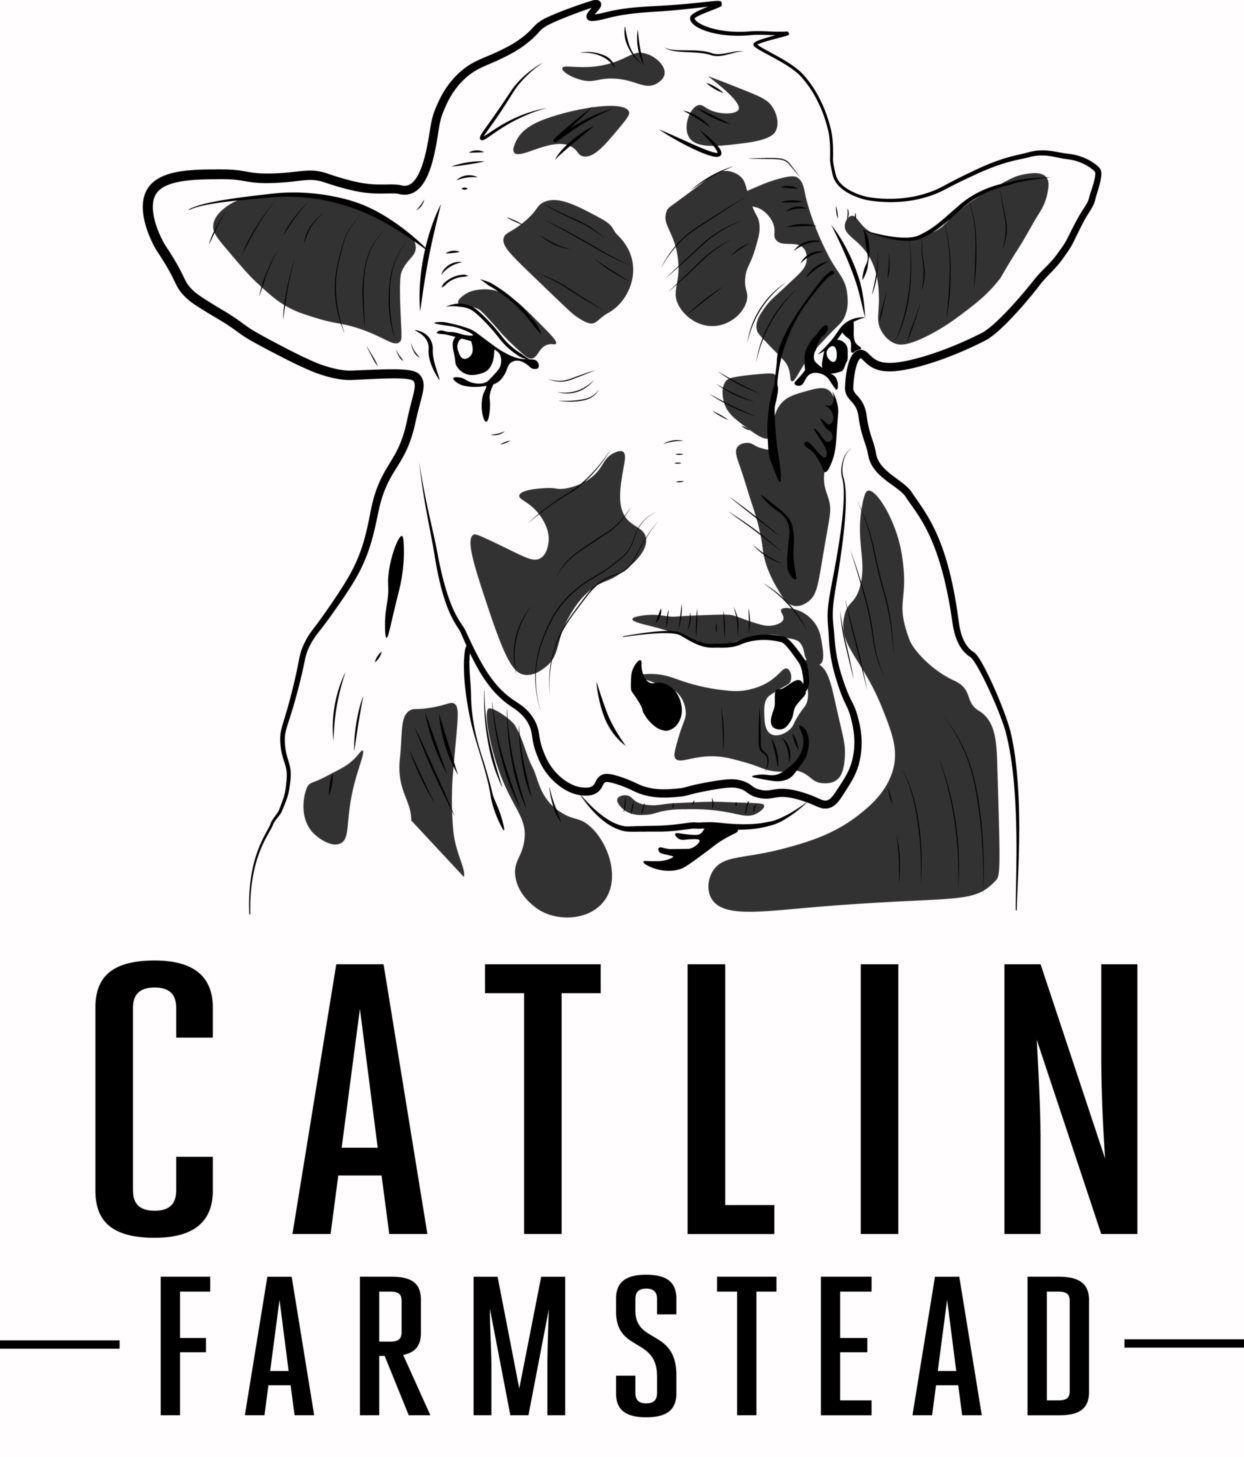 Farmstead Logo - Home - Smith's Country Cheese